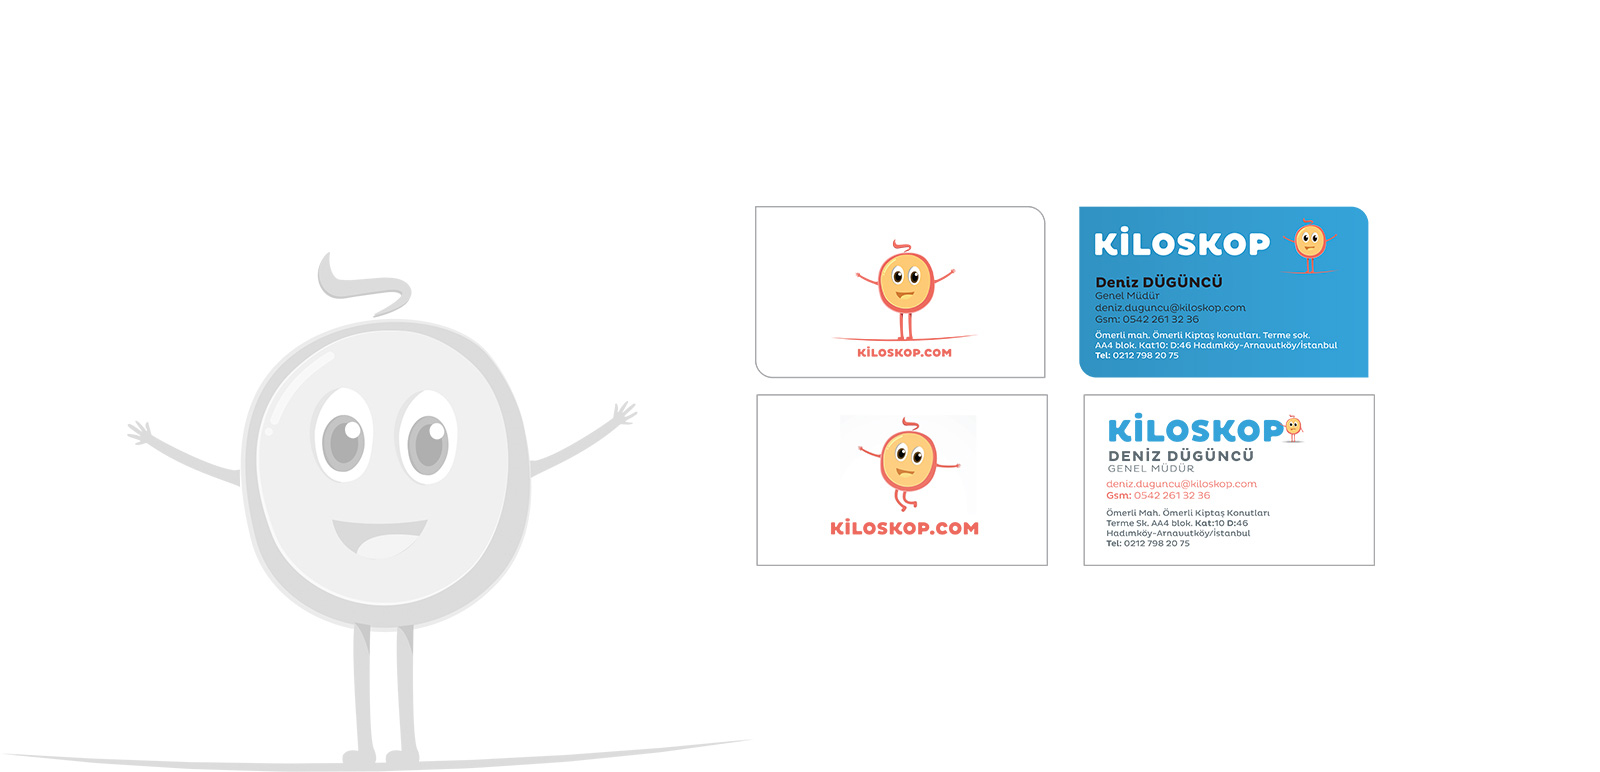 Kiloskop Logo, Corporate Identity 5